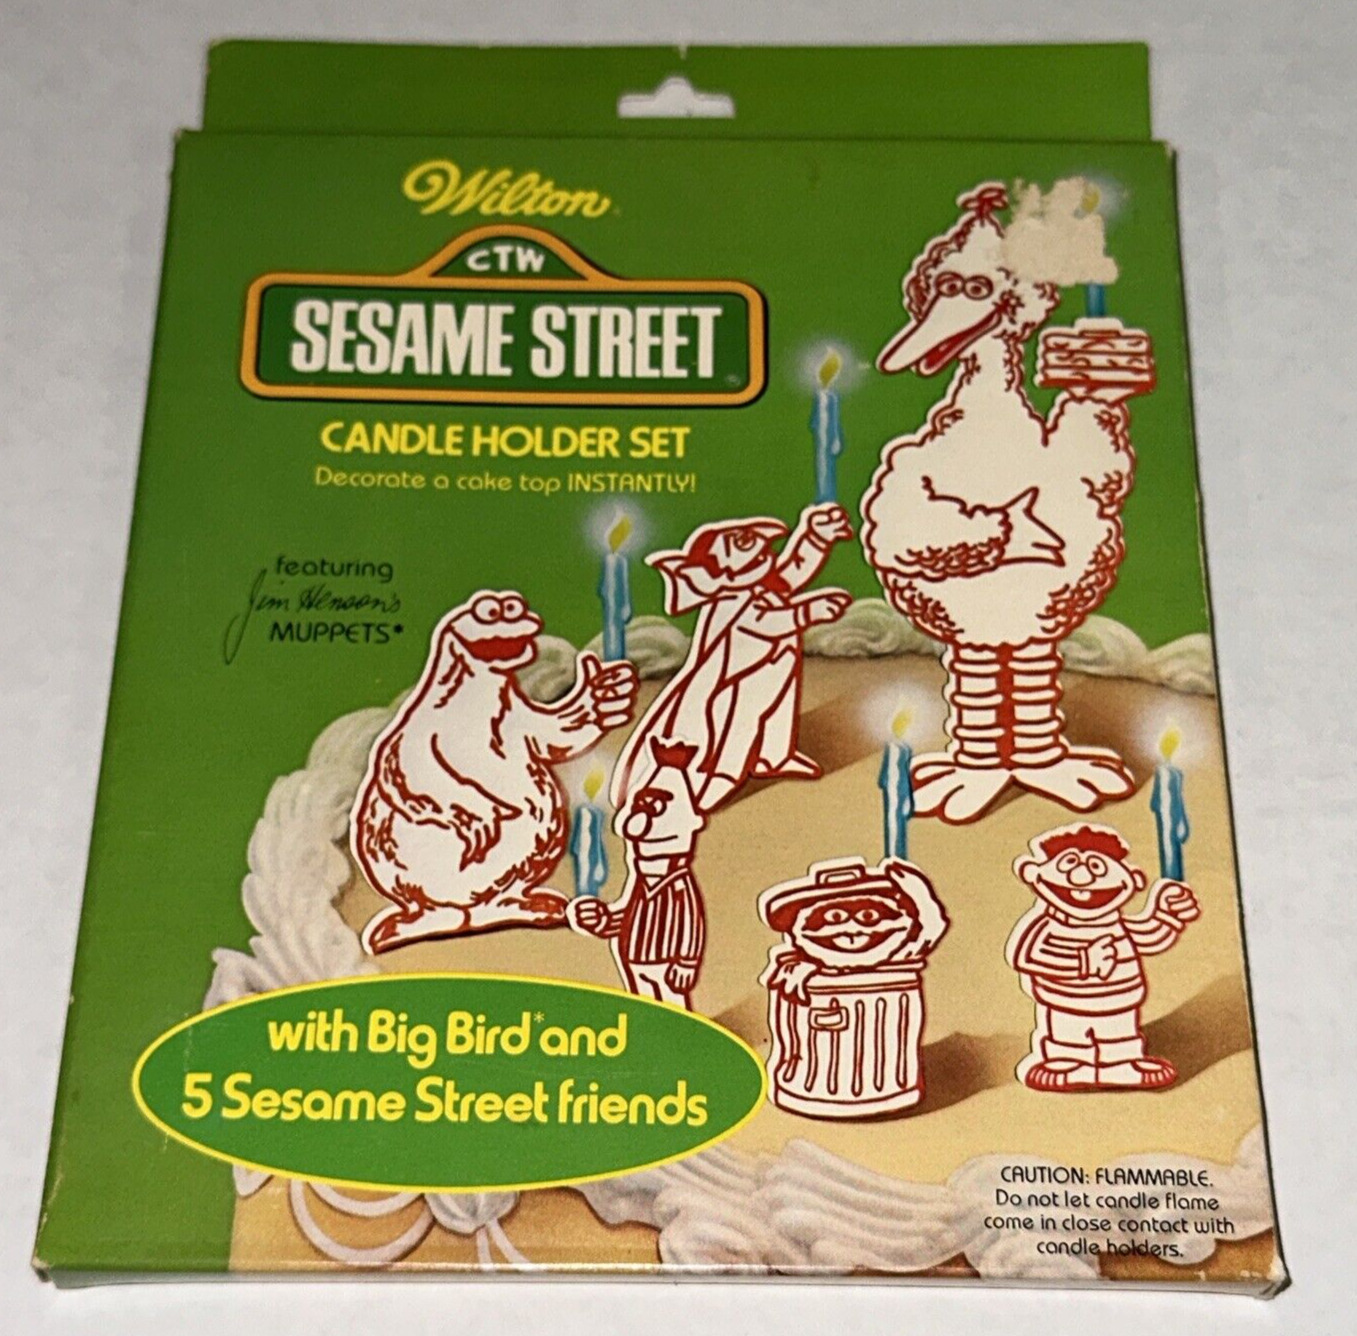 1979 Wilton Jim Hensons Muppets CTW SESAME STREET Candle Holder Set Sealed Box